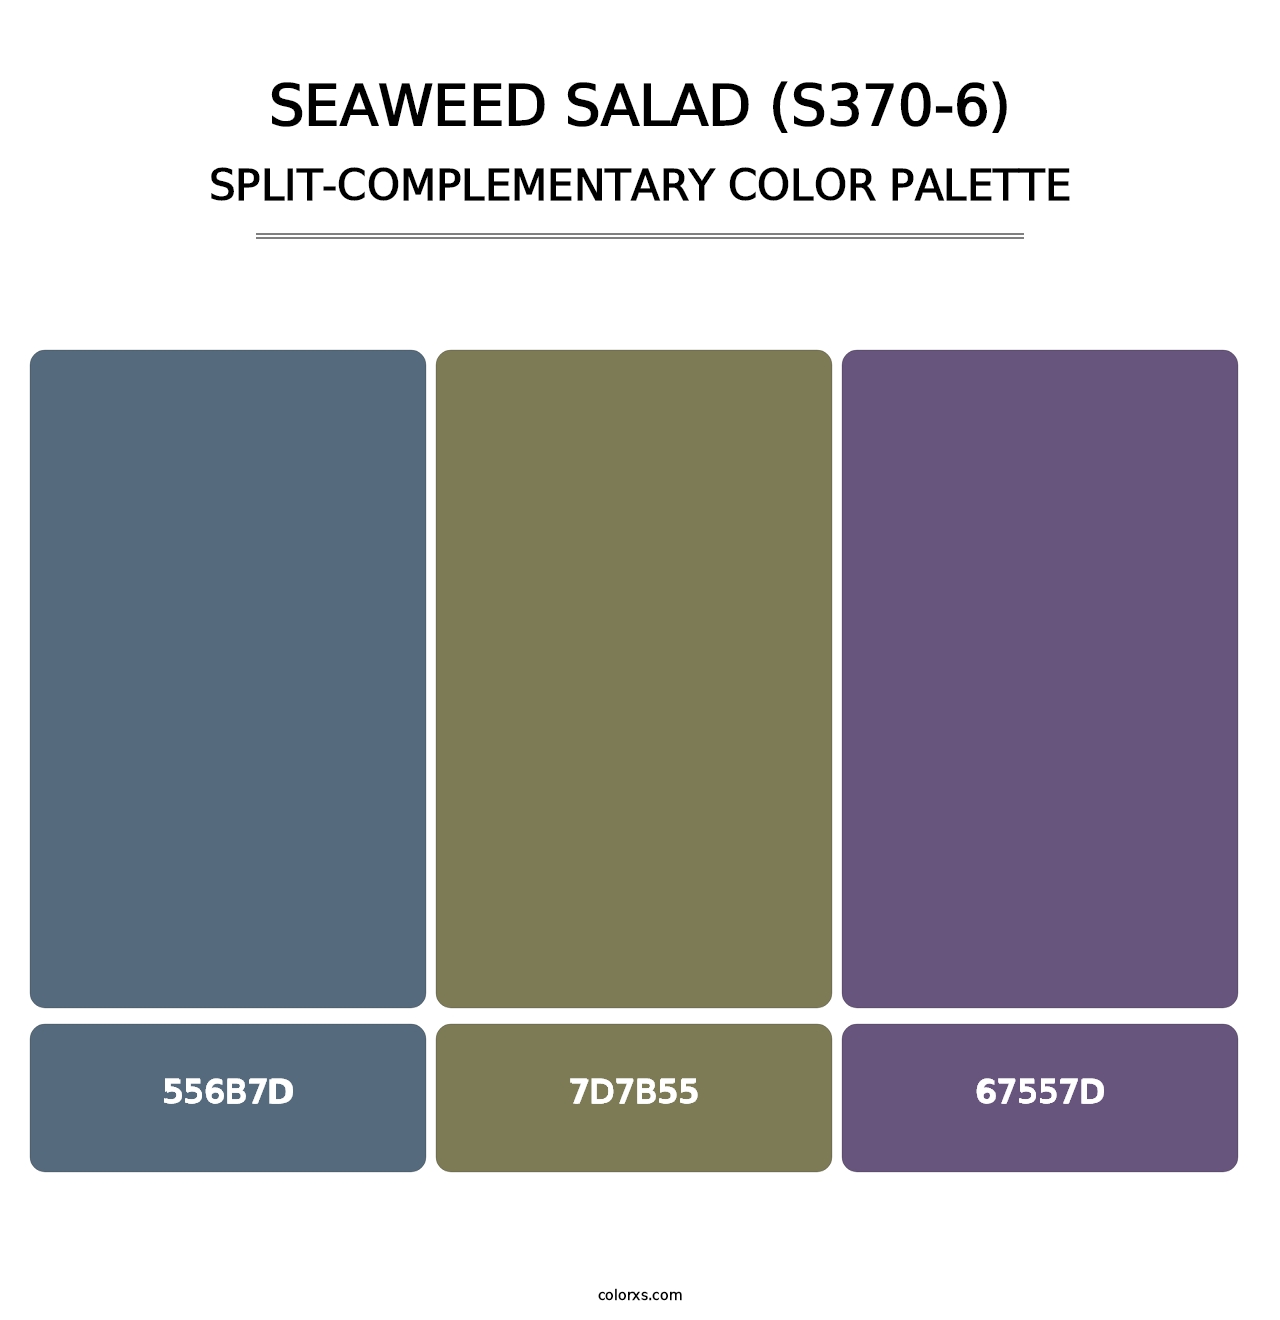 Seaweed Salad (S370-6) - Split-Complementary Color Palette